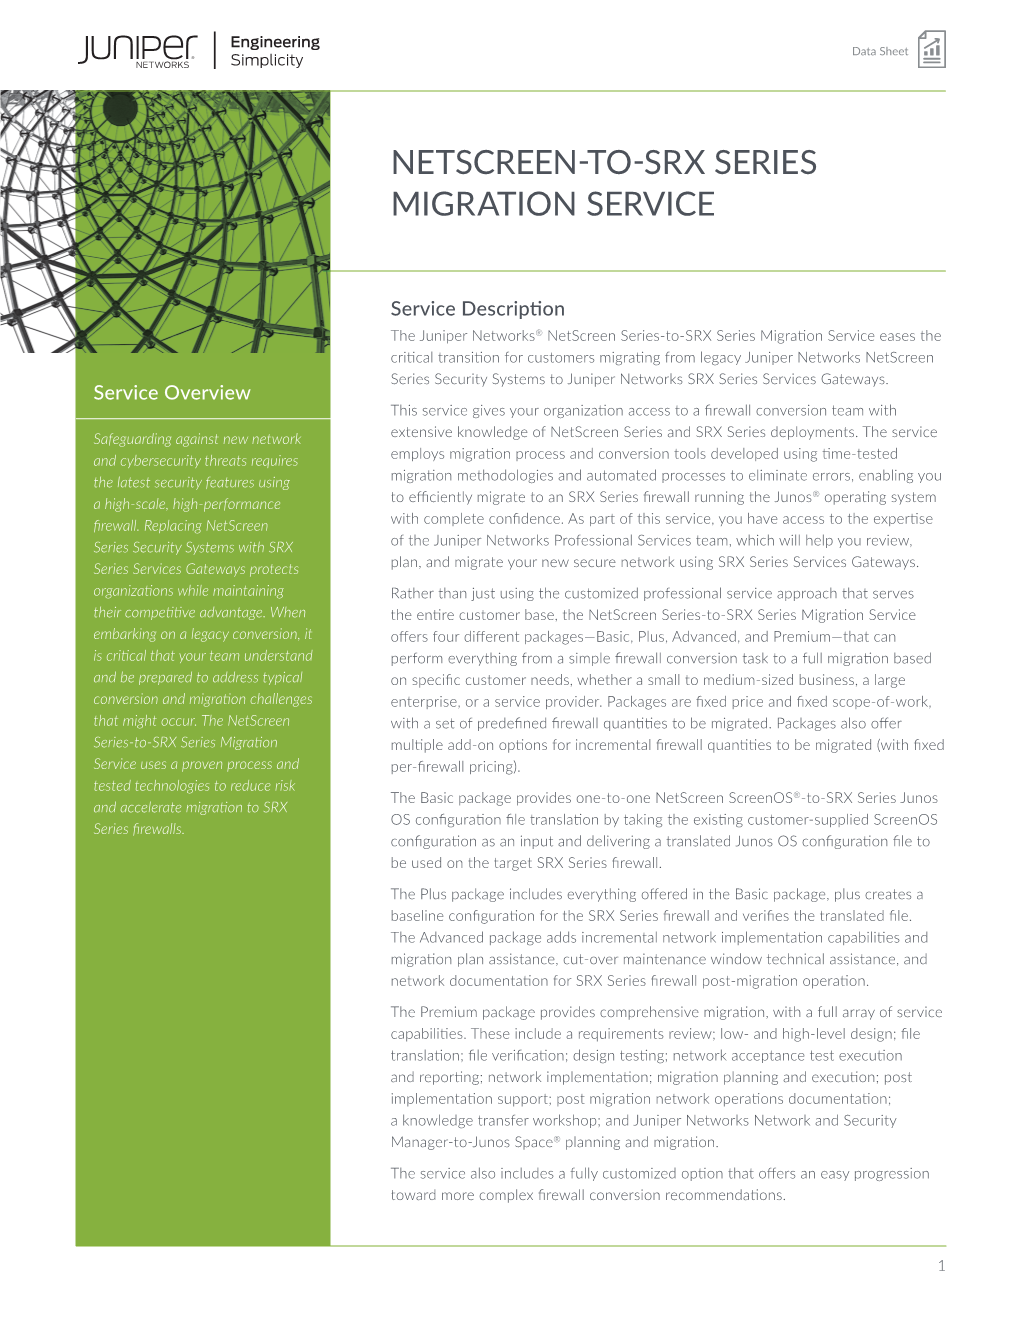 Netscreen-To-SRX Series Migration Service Datasheet